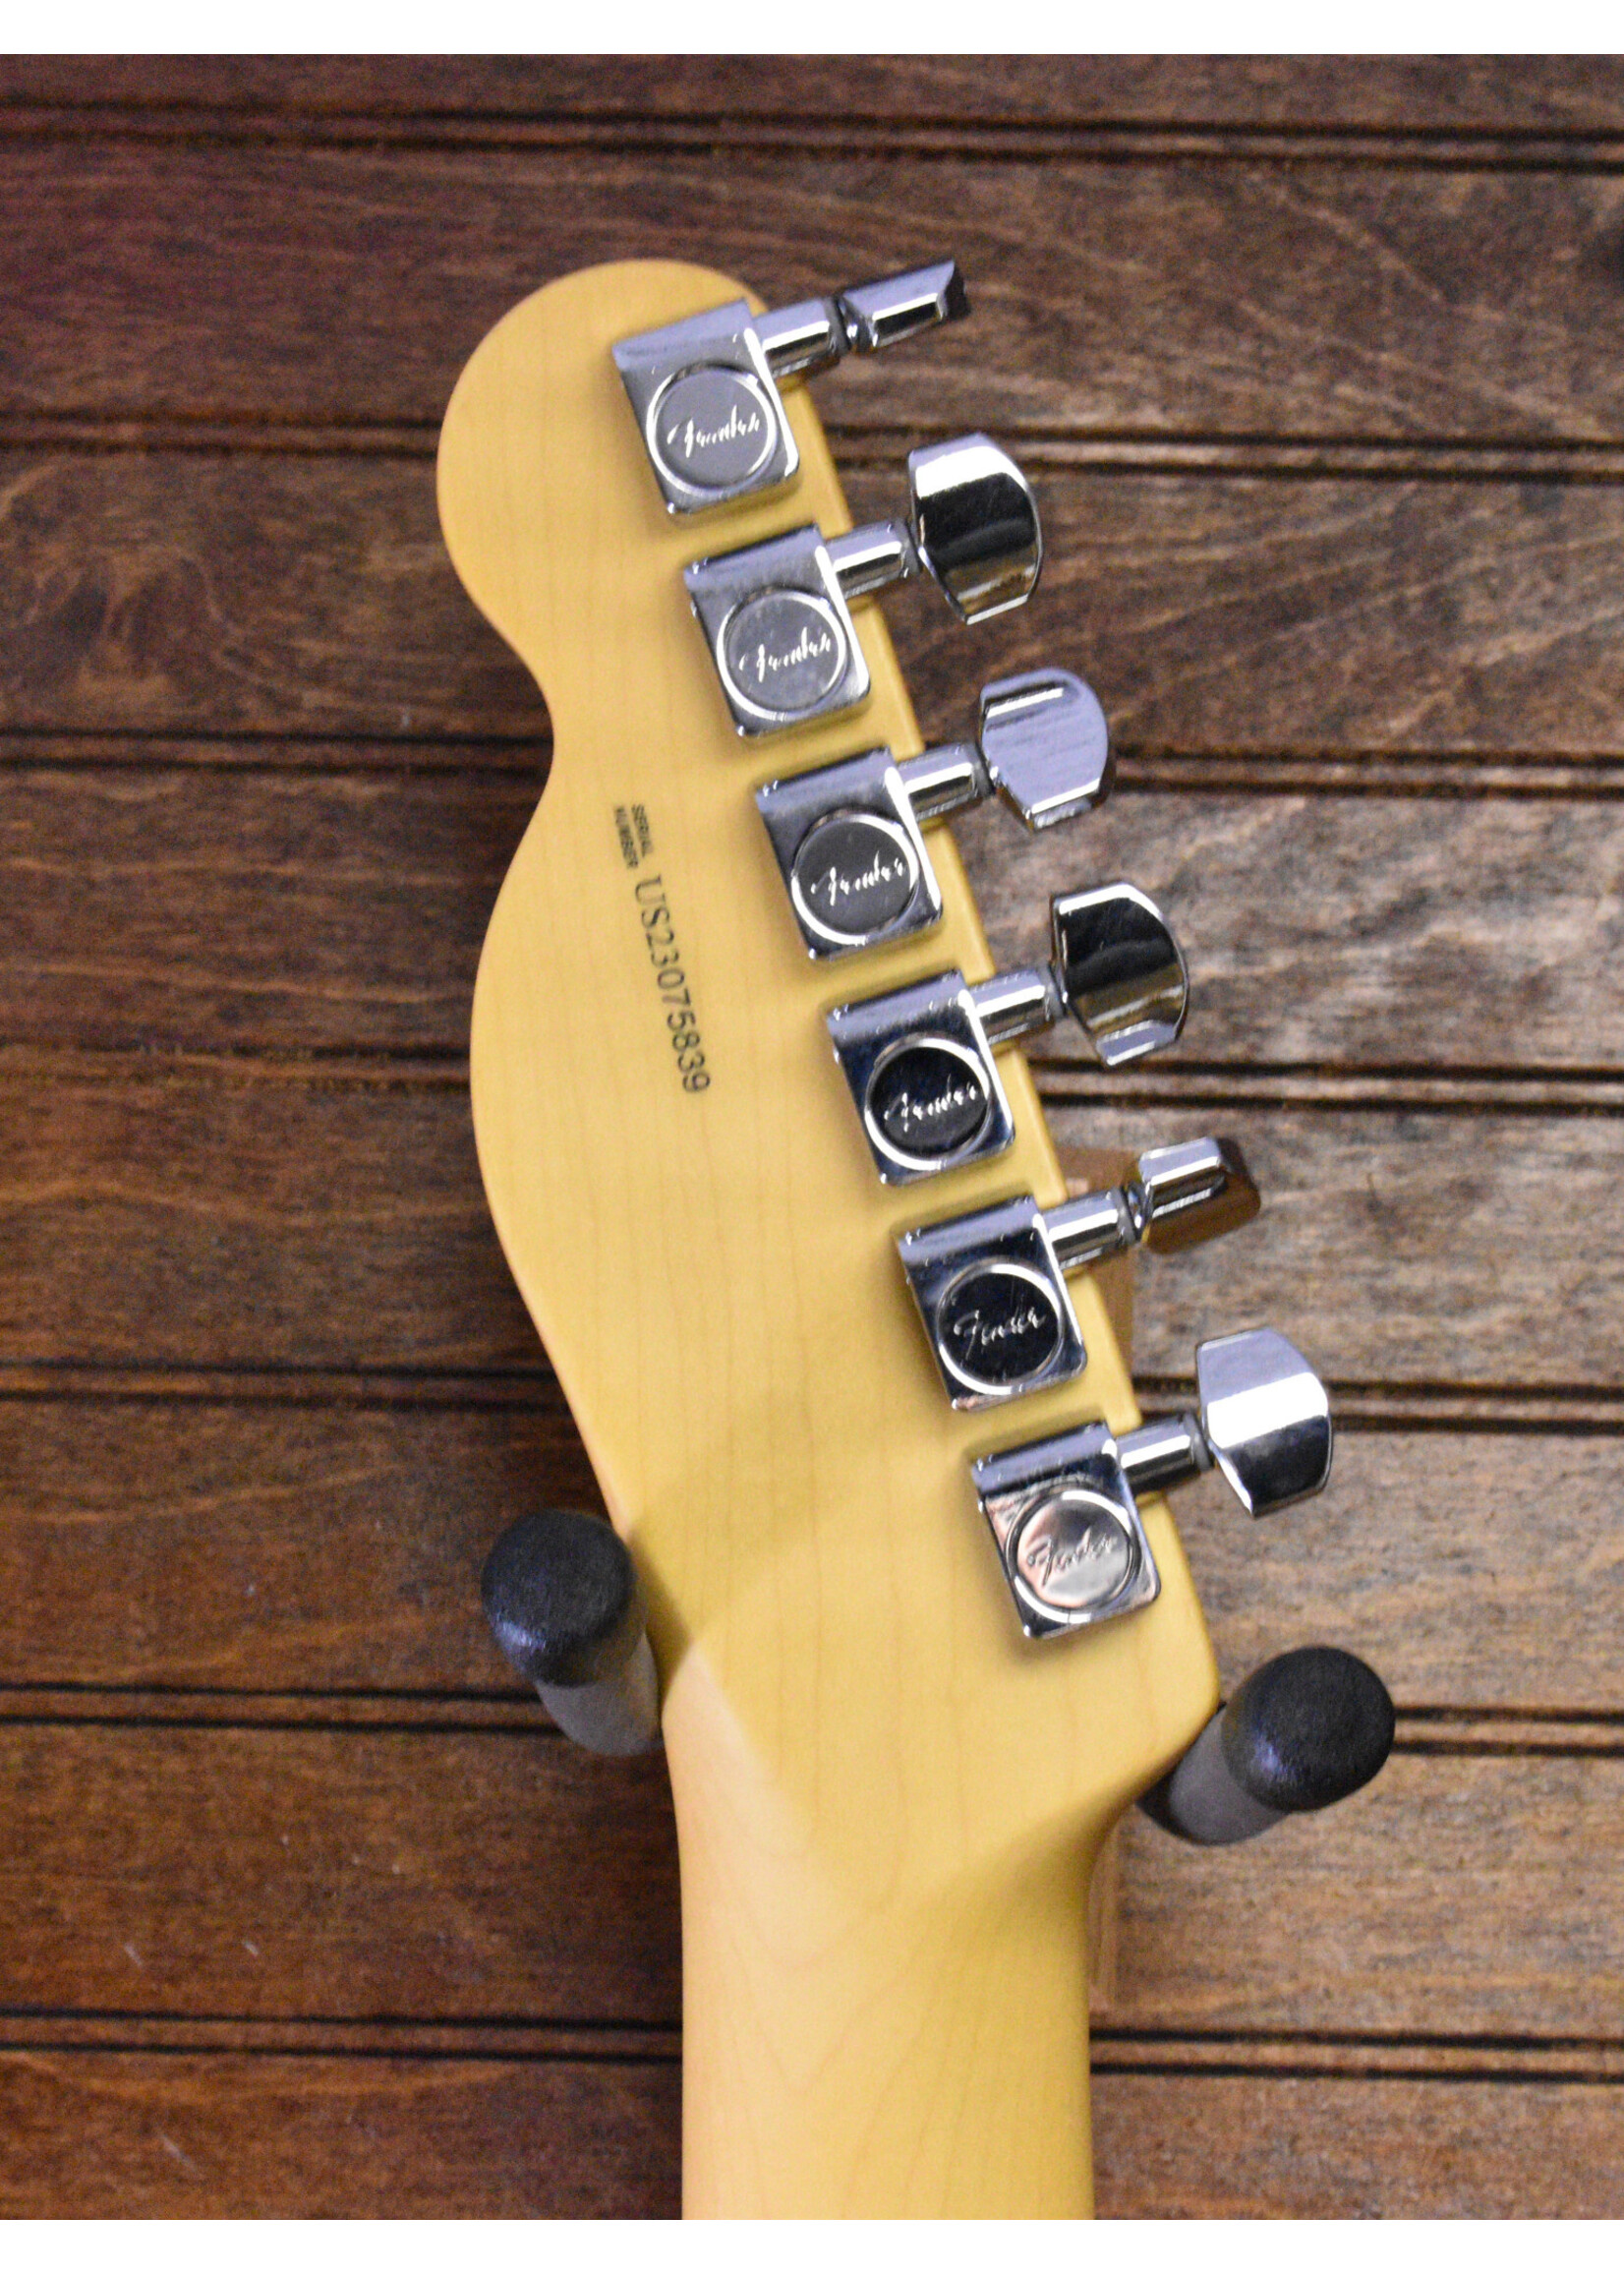 Fender Fender American Professional II Telecaster, Butterscotch Blonde